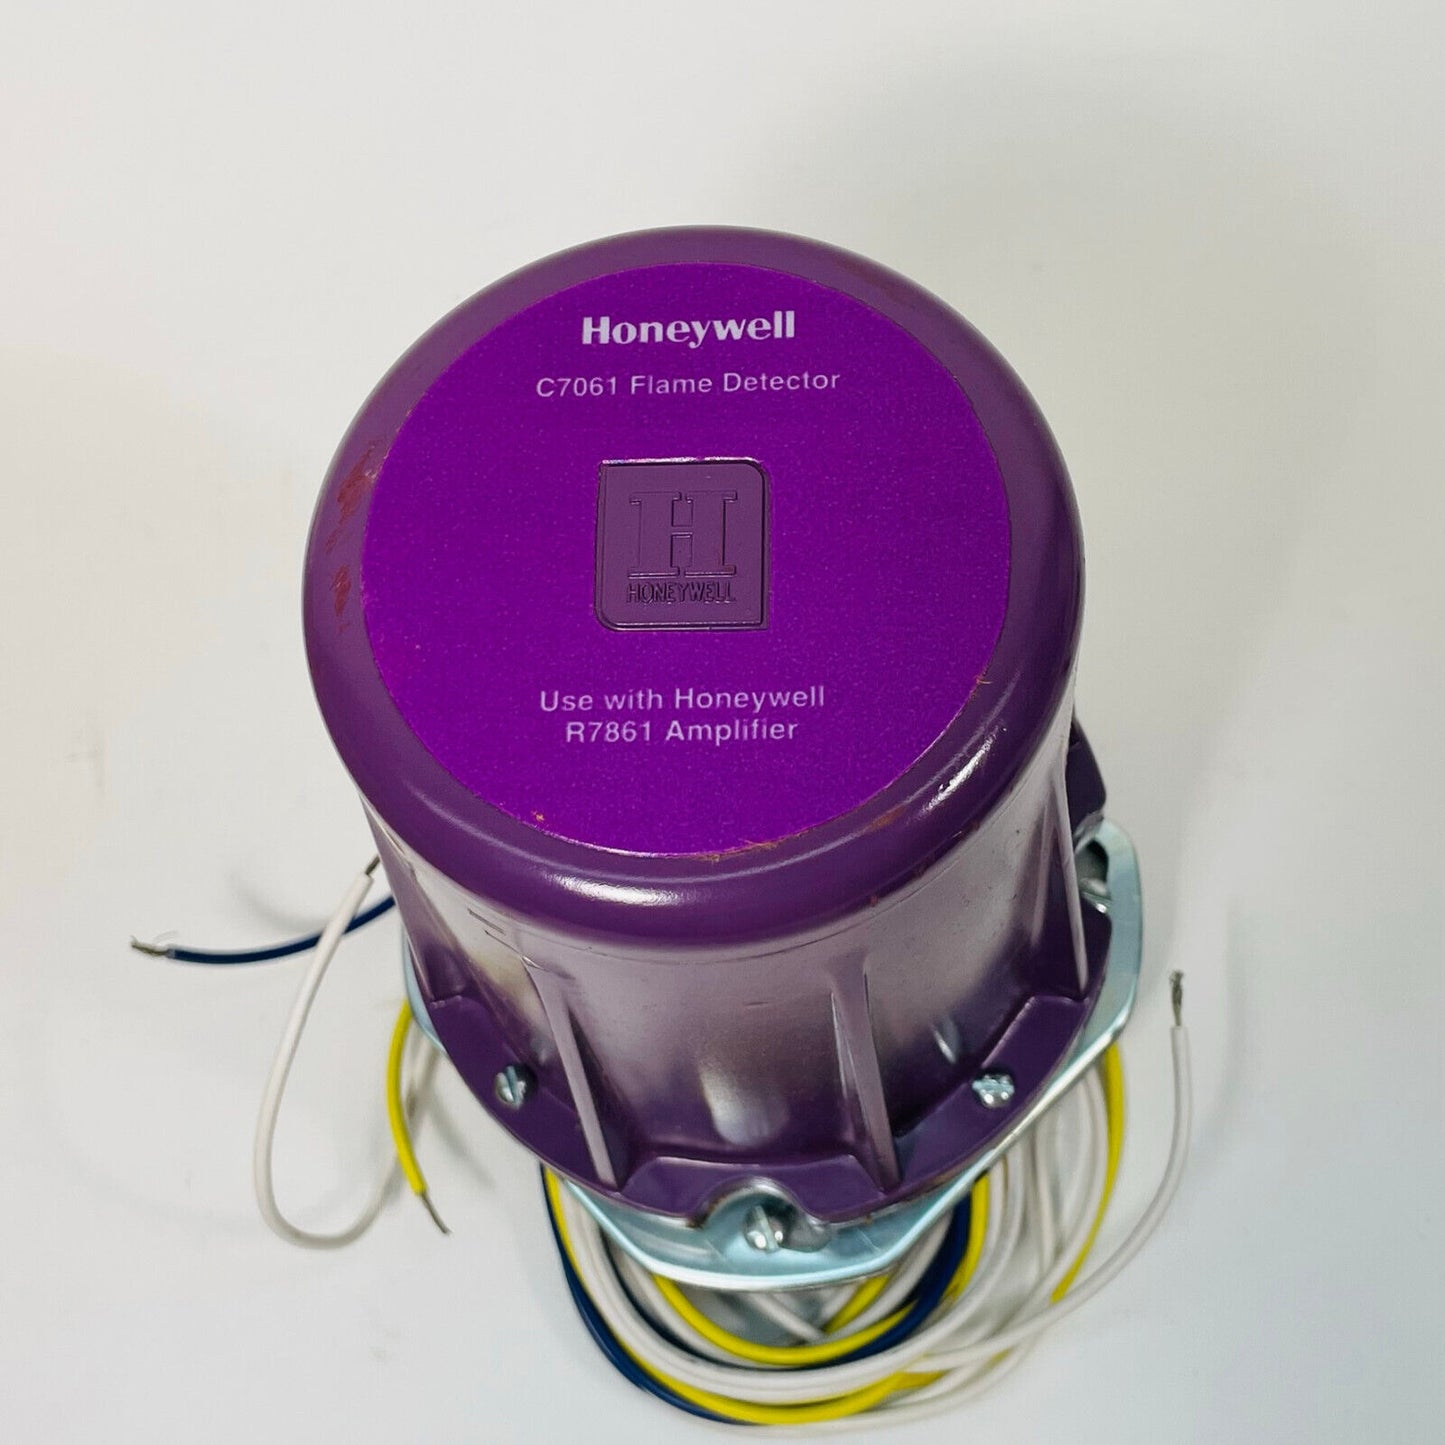 New HONEYWELL C7061A 1012 / C7061A1012 UV Flame Detector